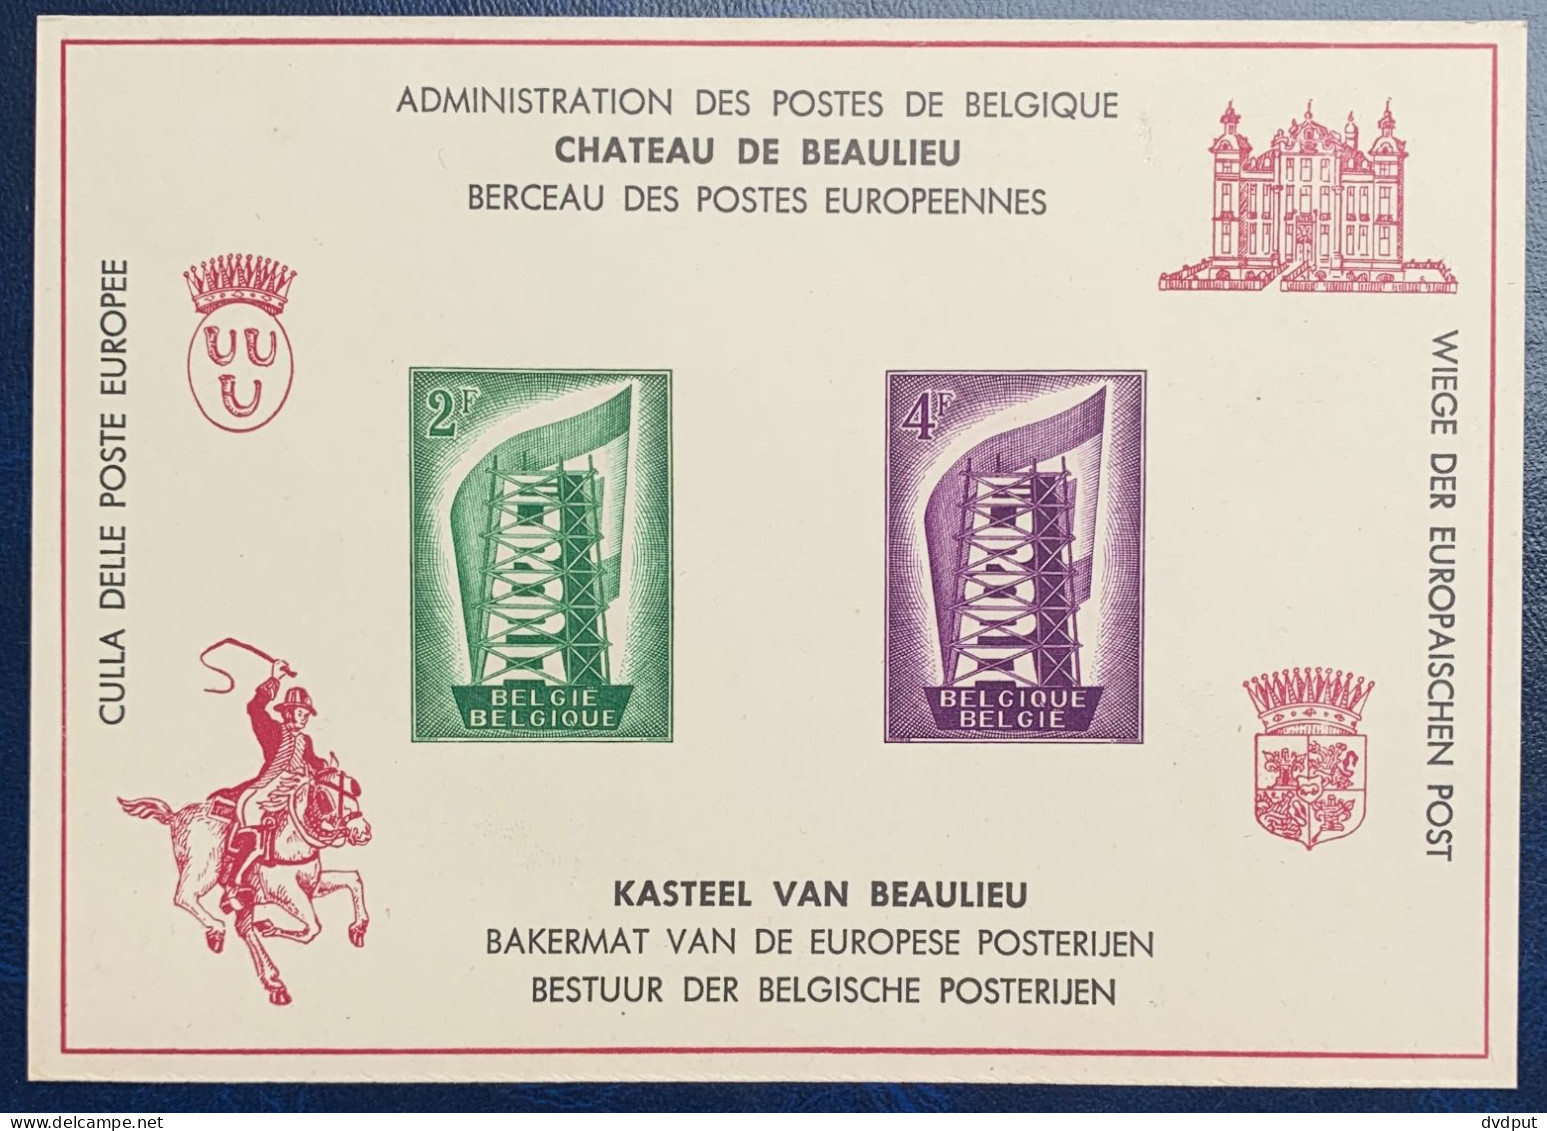 België, 1956, LX21, Postfris **, OBP 37€ - Folettos De Lujo [LX]